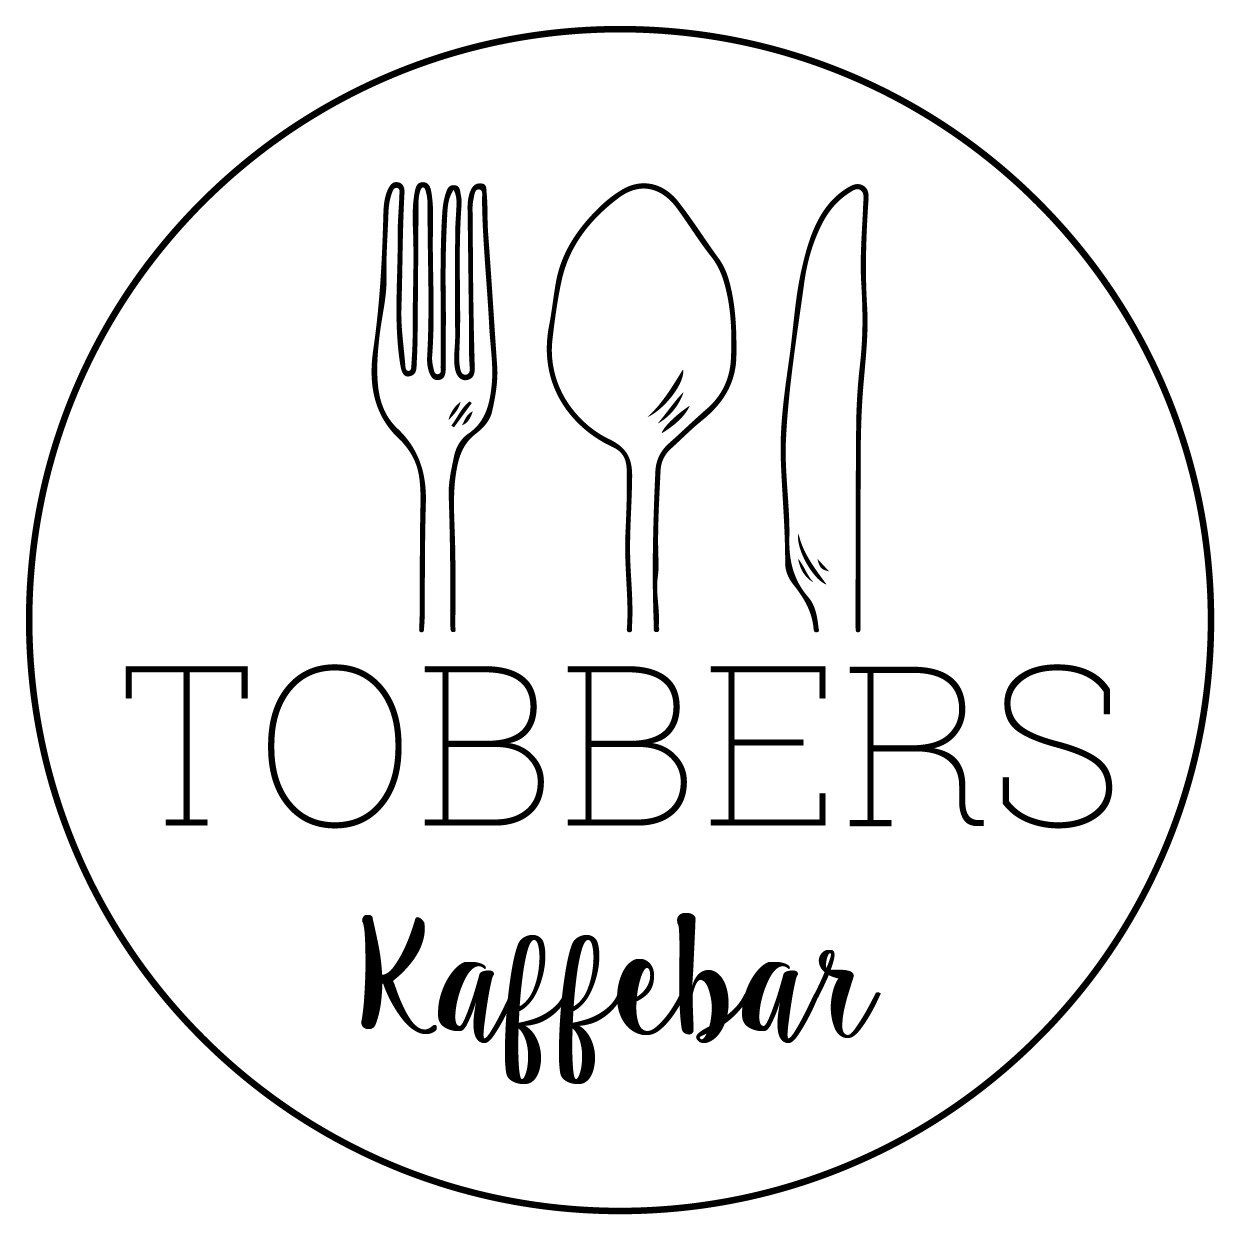 Tobbers Kaffebar